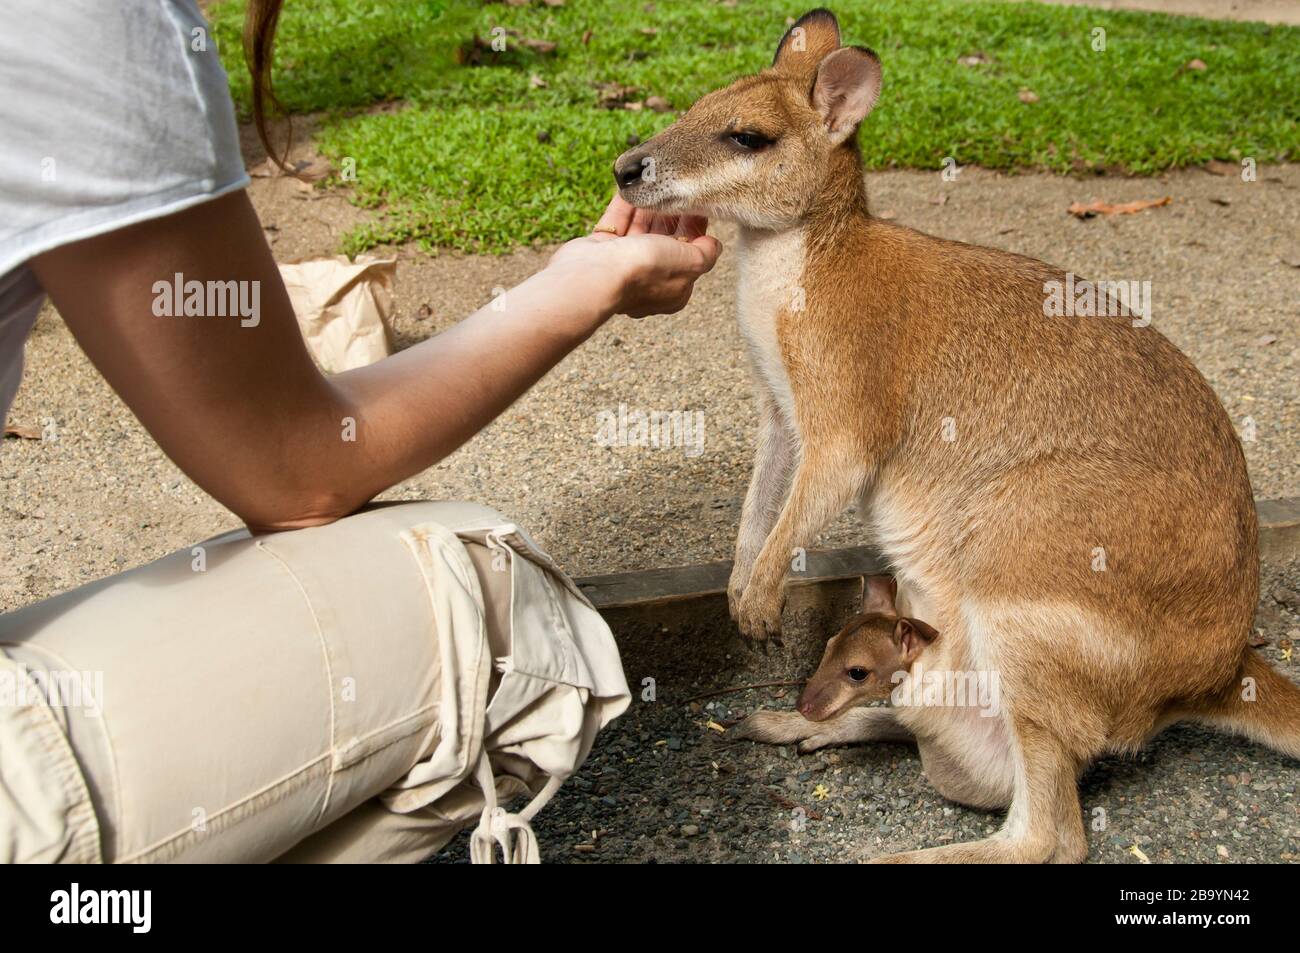 La mano della donna nutre un wallaby agile con un joey, Rainforest Habitat Wildlife Sanctuary, Port Douglas, Queensland, Australia. Foto Stock